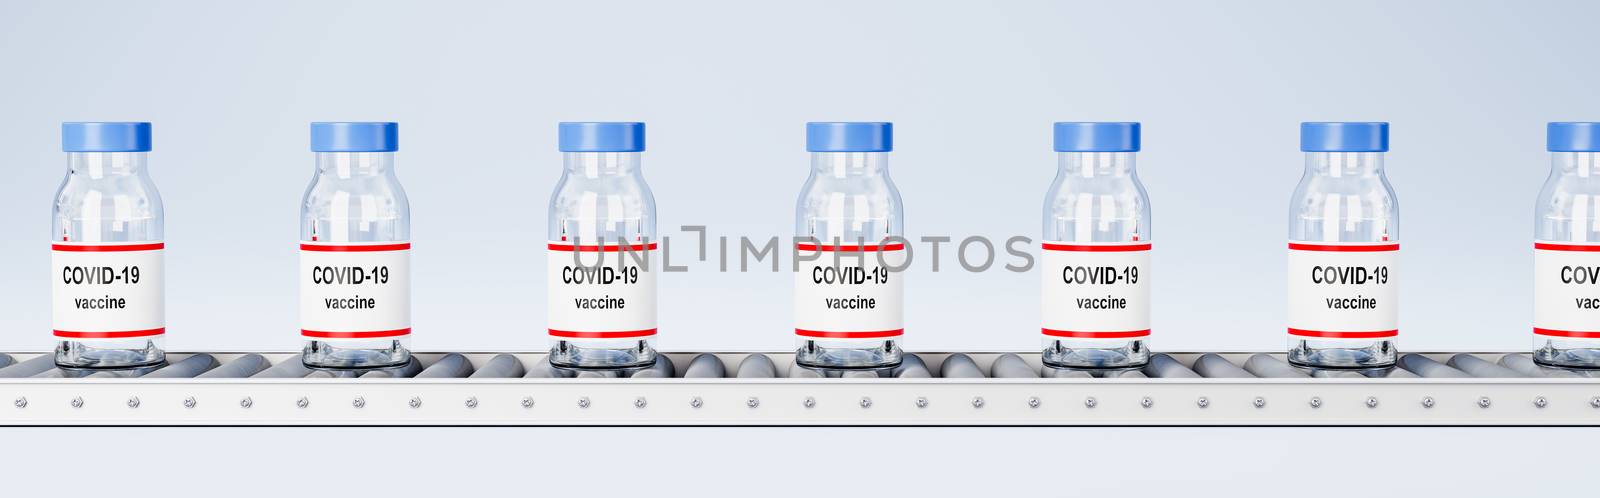 Covid 19 Vaccine Bottles on Conveyor Belt on Light Blue by make